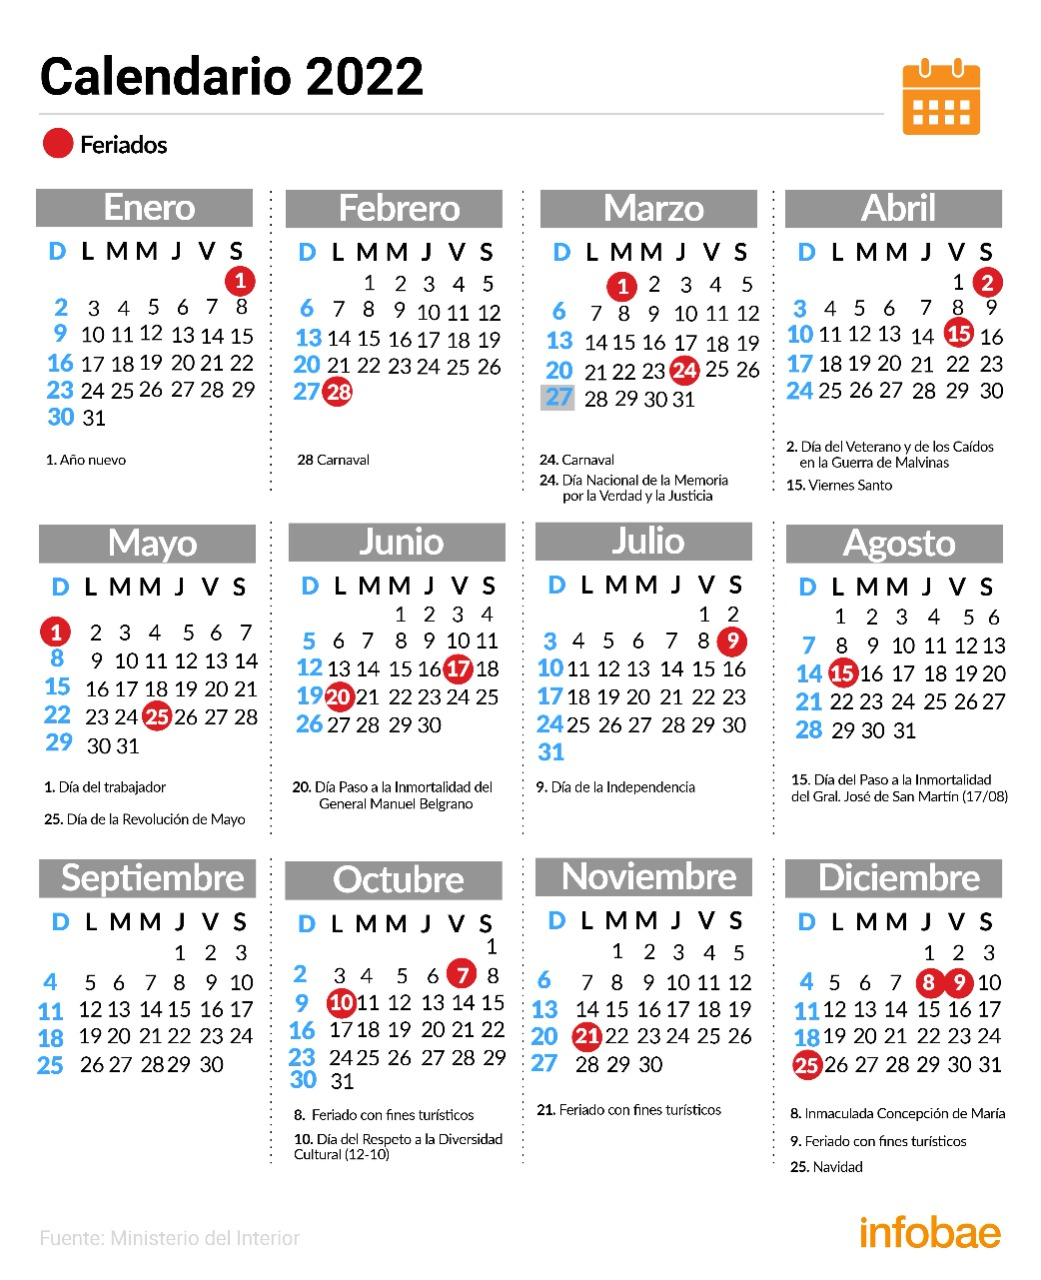 Calendario de feriados de 2022.